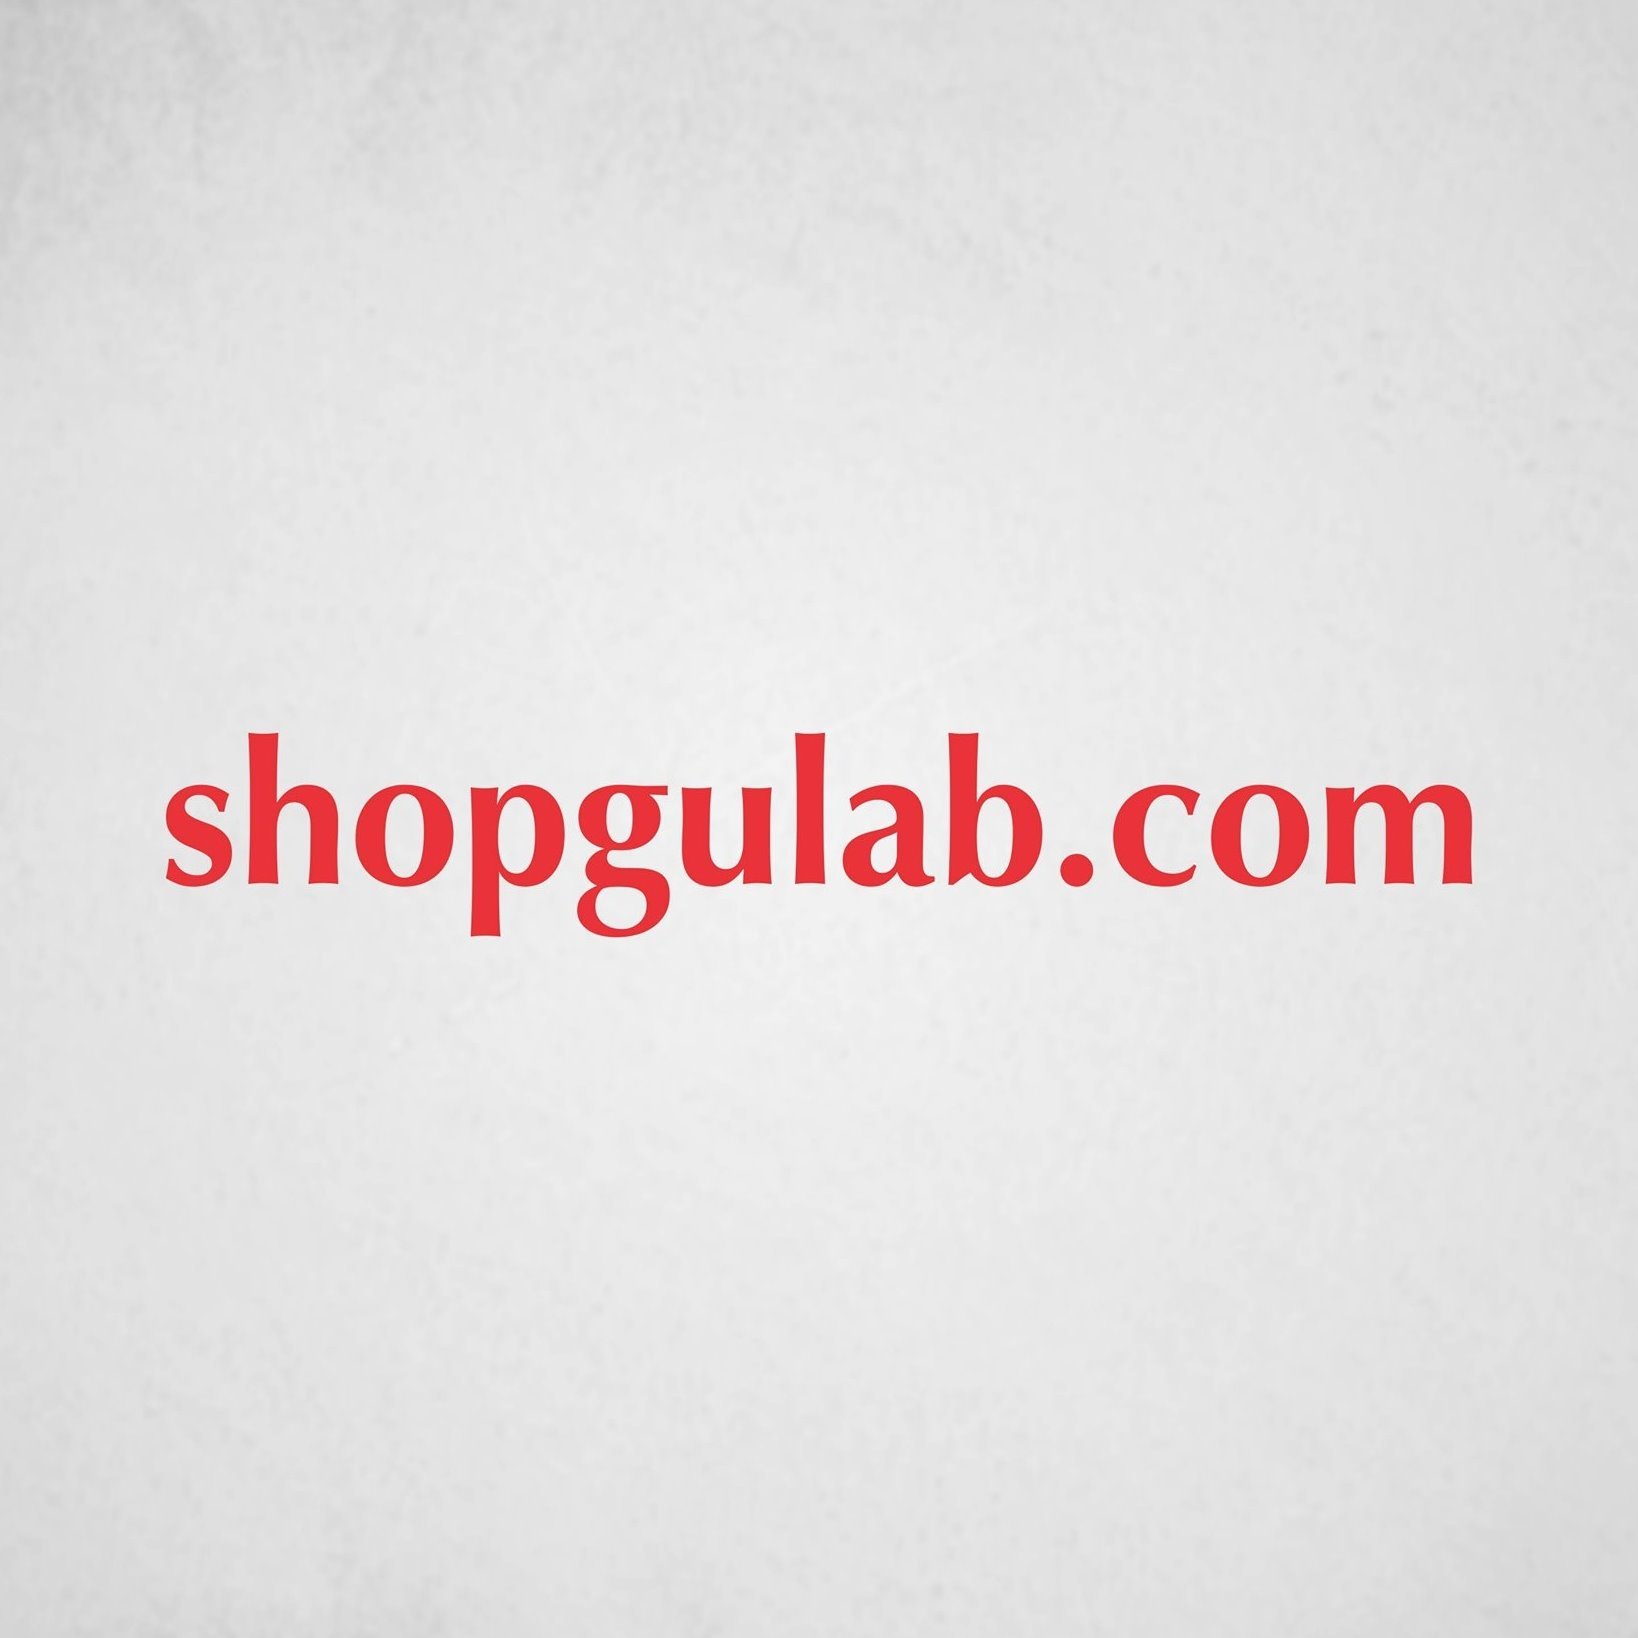 Company Logo For Shop Gulab'